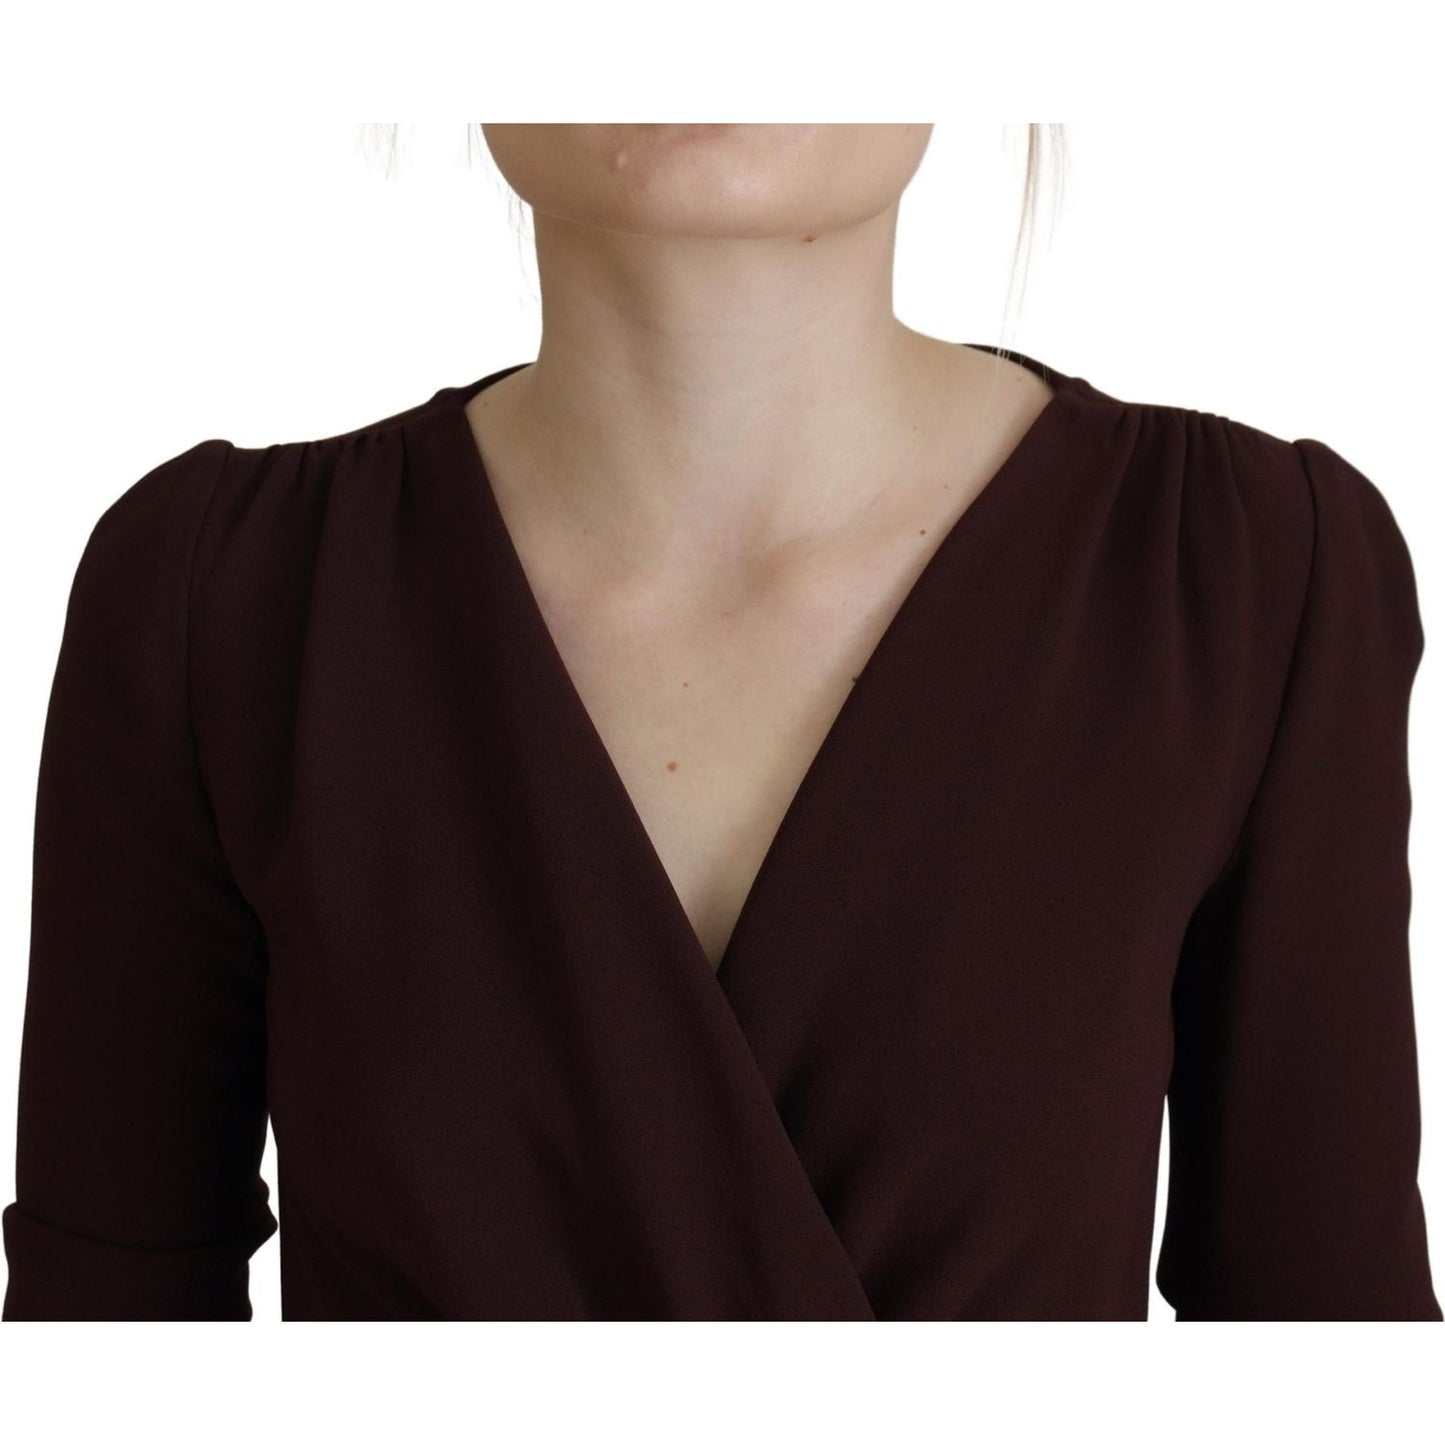 Dolce & Gabbana Elegant Brown Long Sleeve Wrap Dress brown-wrap-long-sleeve-midi-stretch-dress